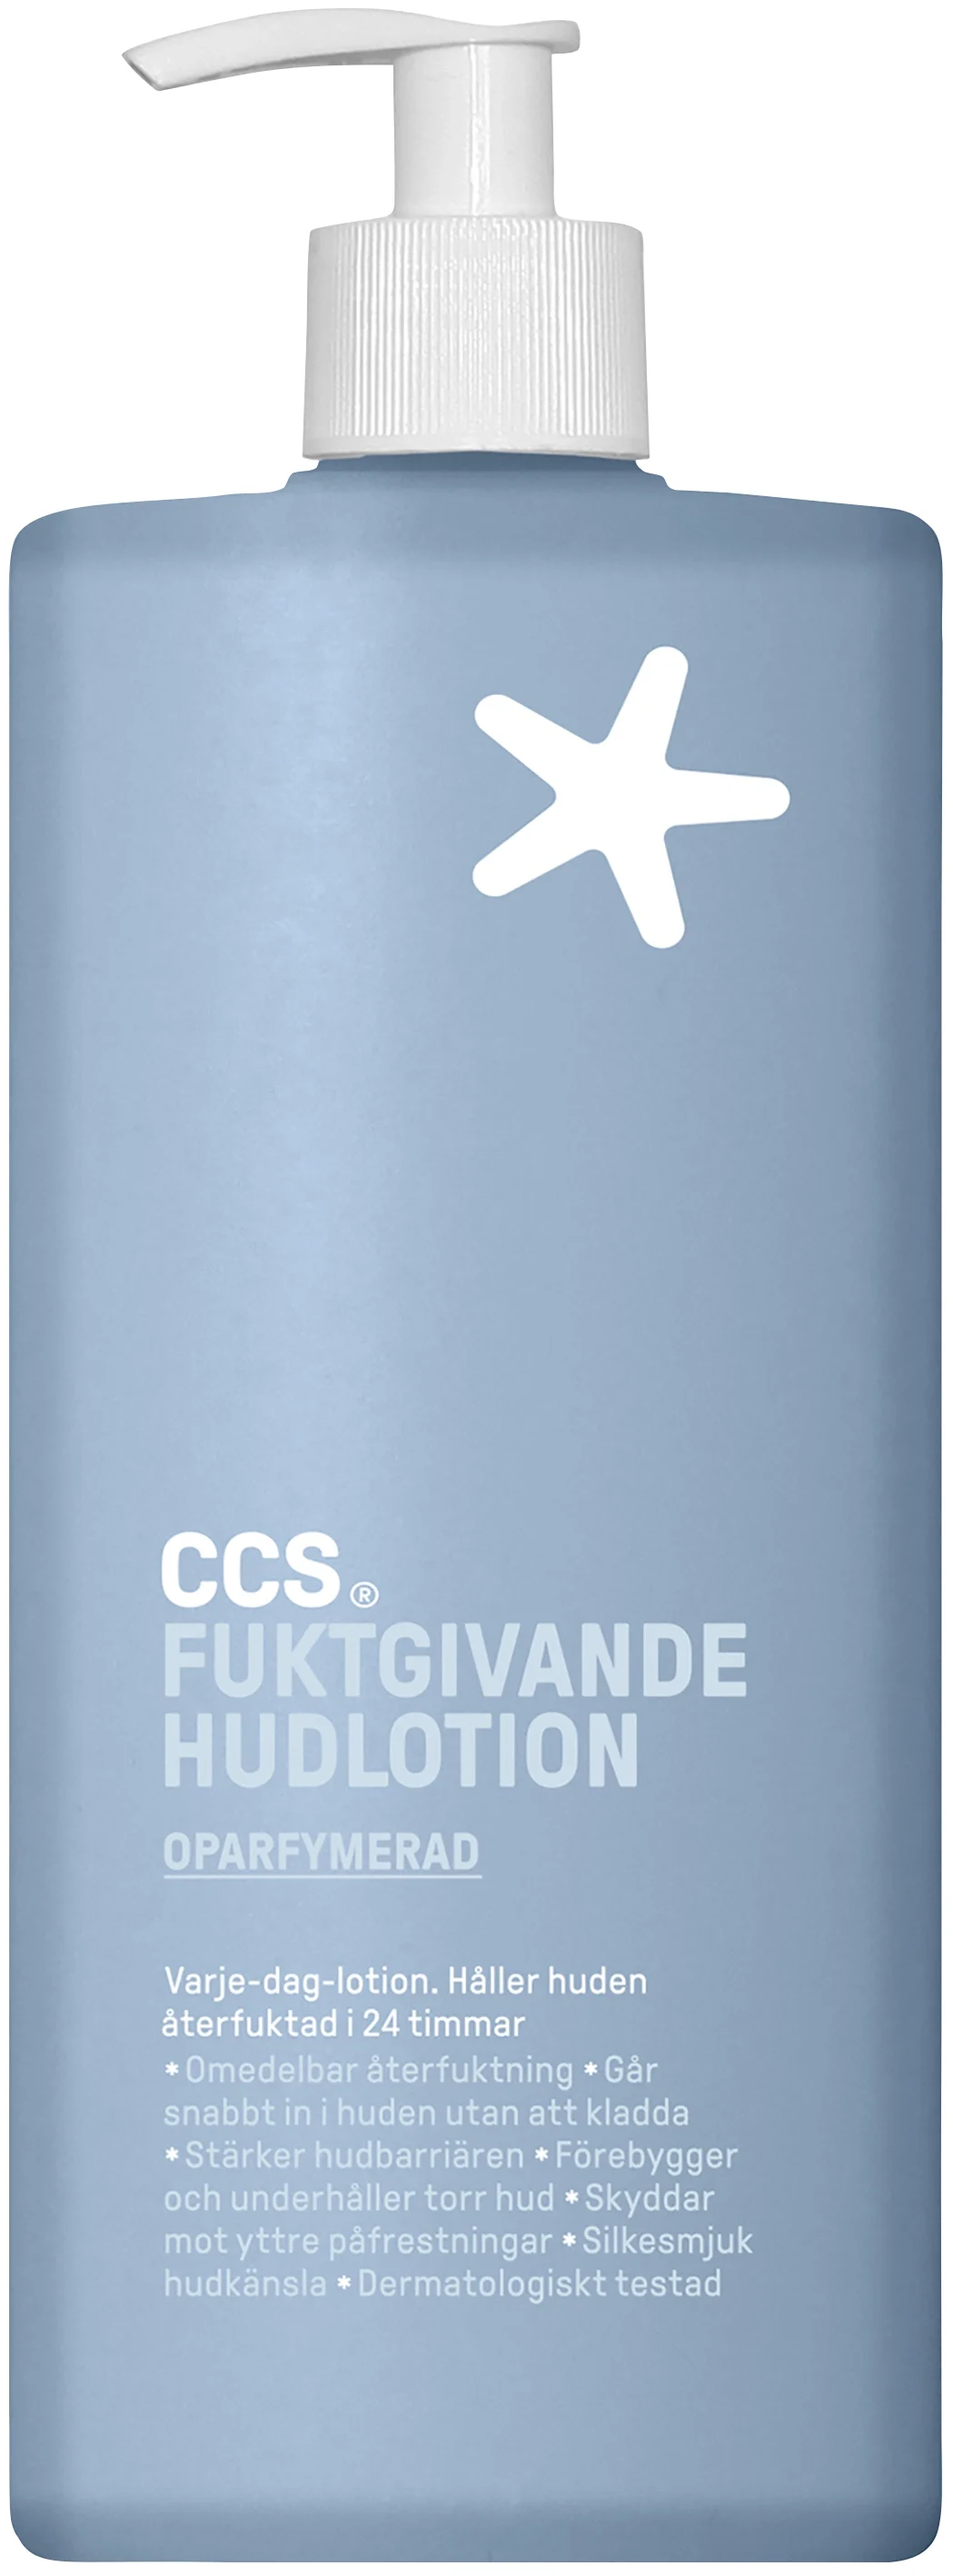 CCS Fuktgivande Hudlotion Oparfymerad 350 ml